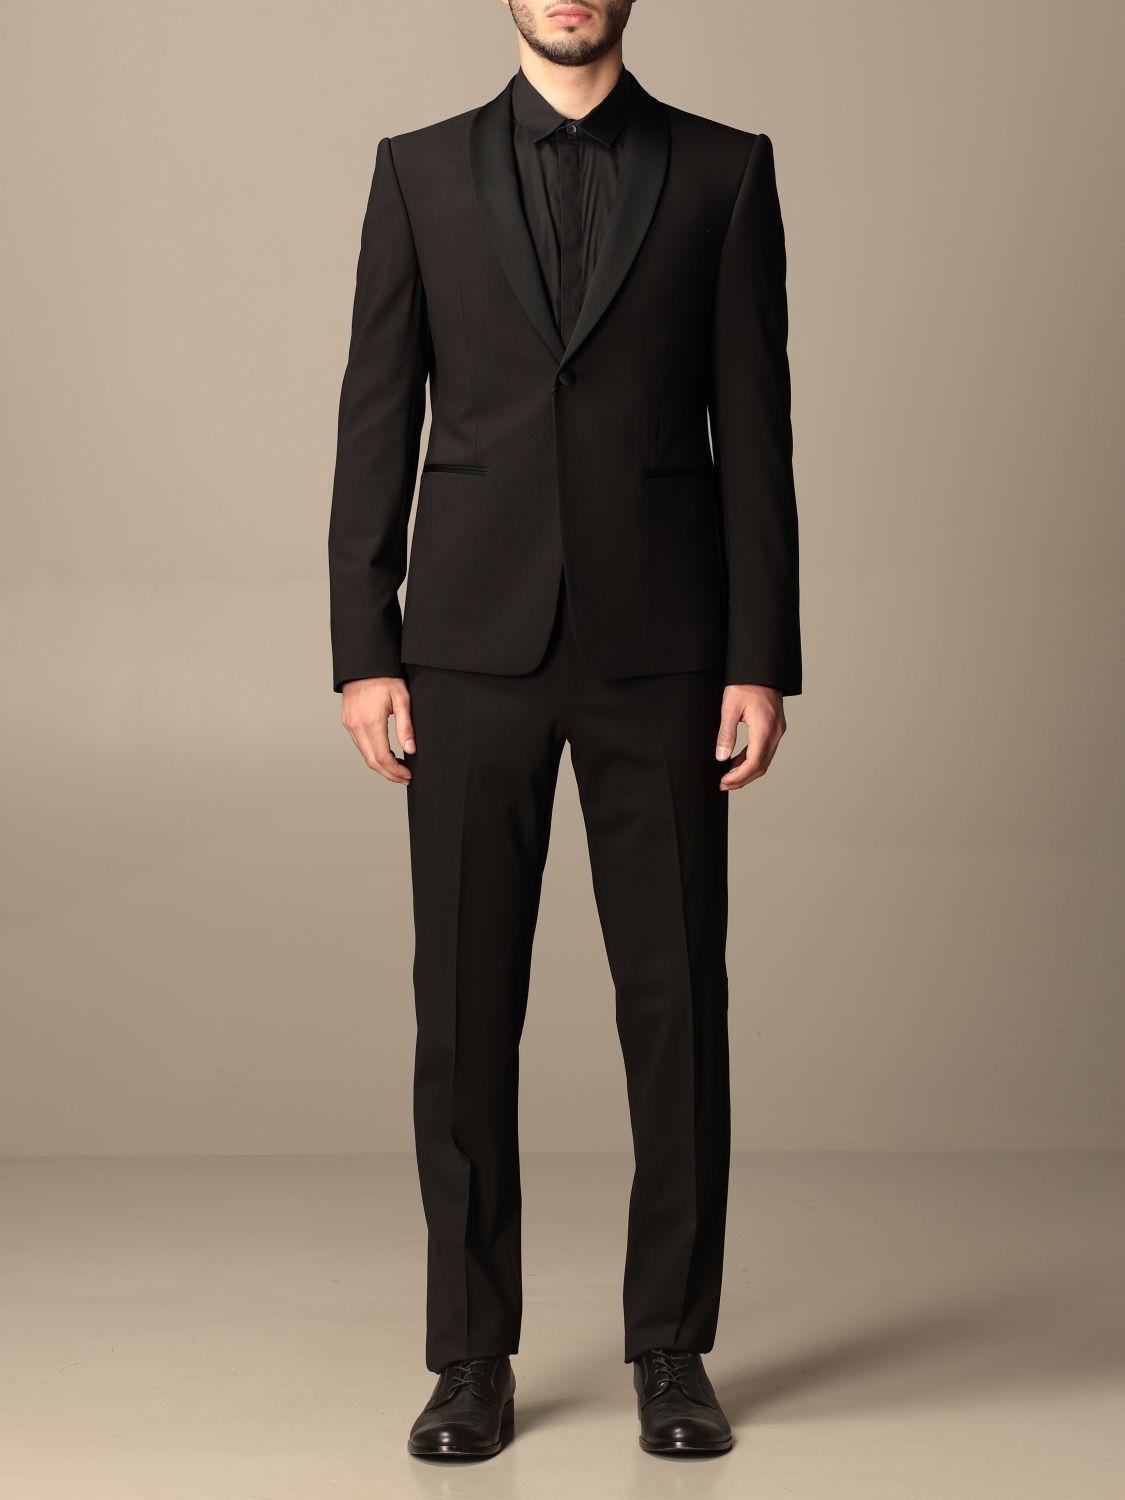 Introducir 83+ imagen emporio armani black suit - Abzlocal.mx